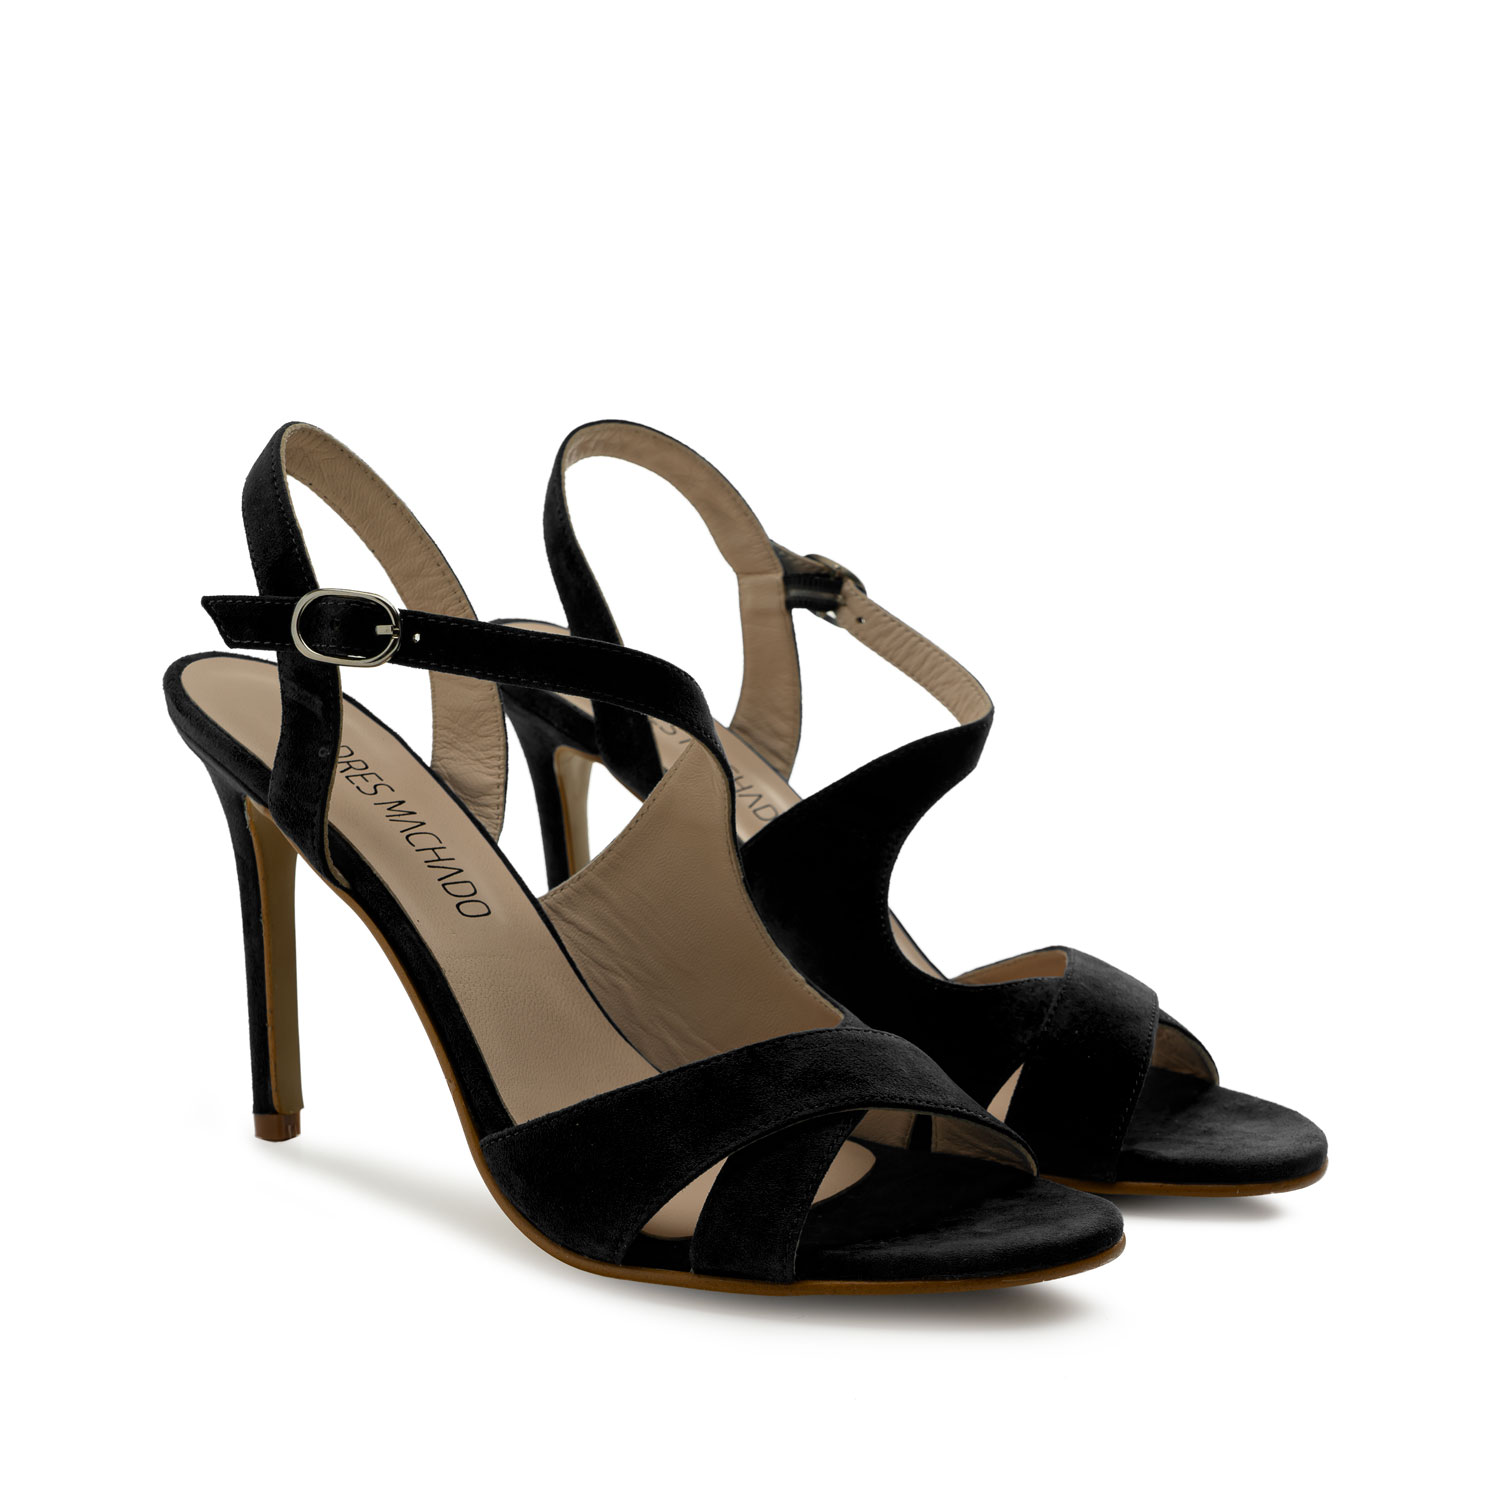 Stiletto Sandals in Black Suede Leather 